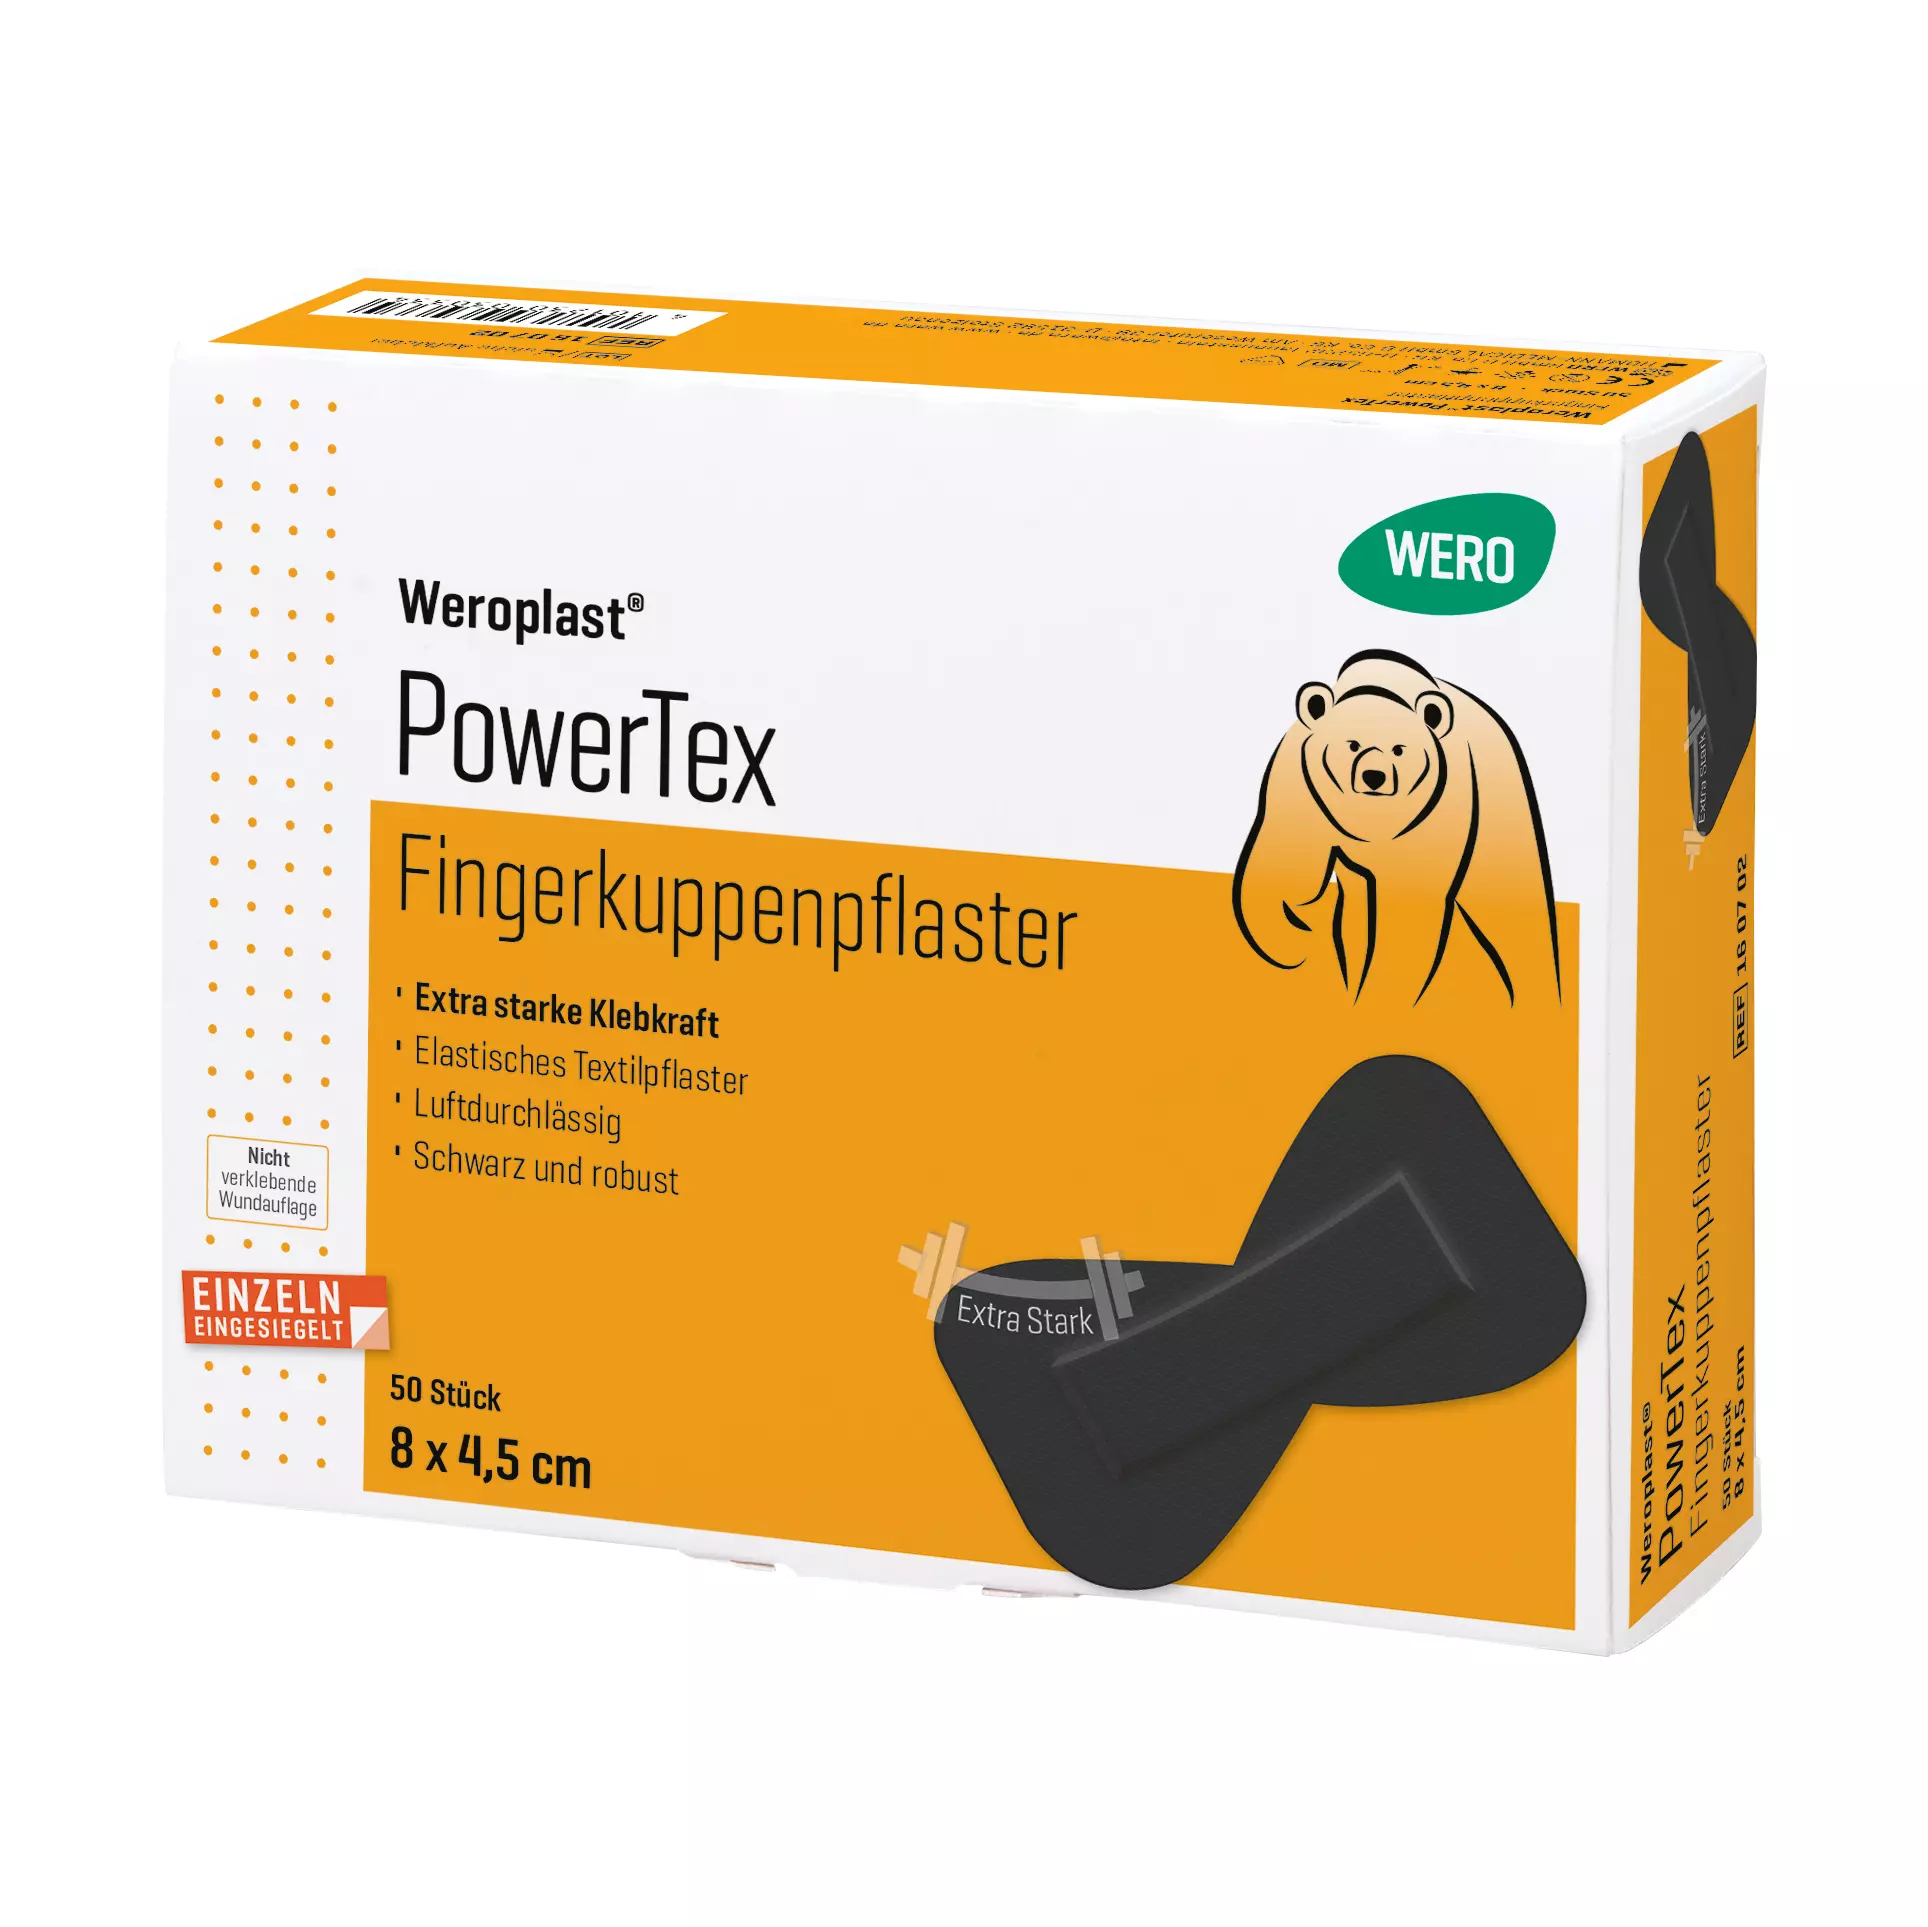 Fingerkuppenpflaster Weroplast® PowerTex